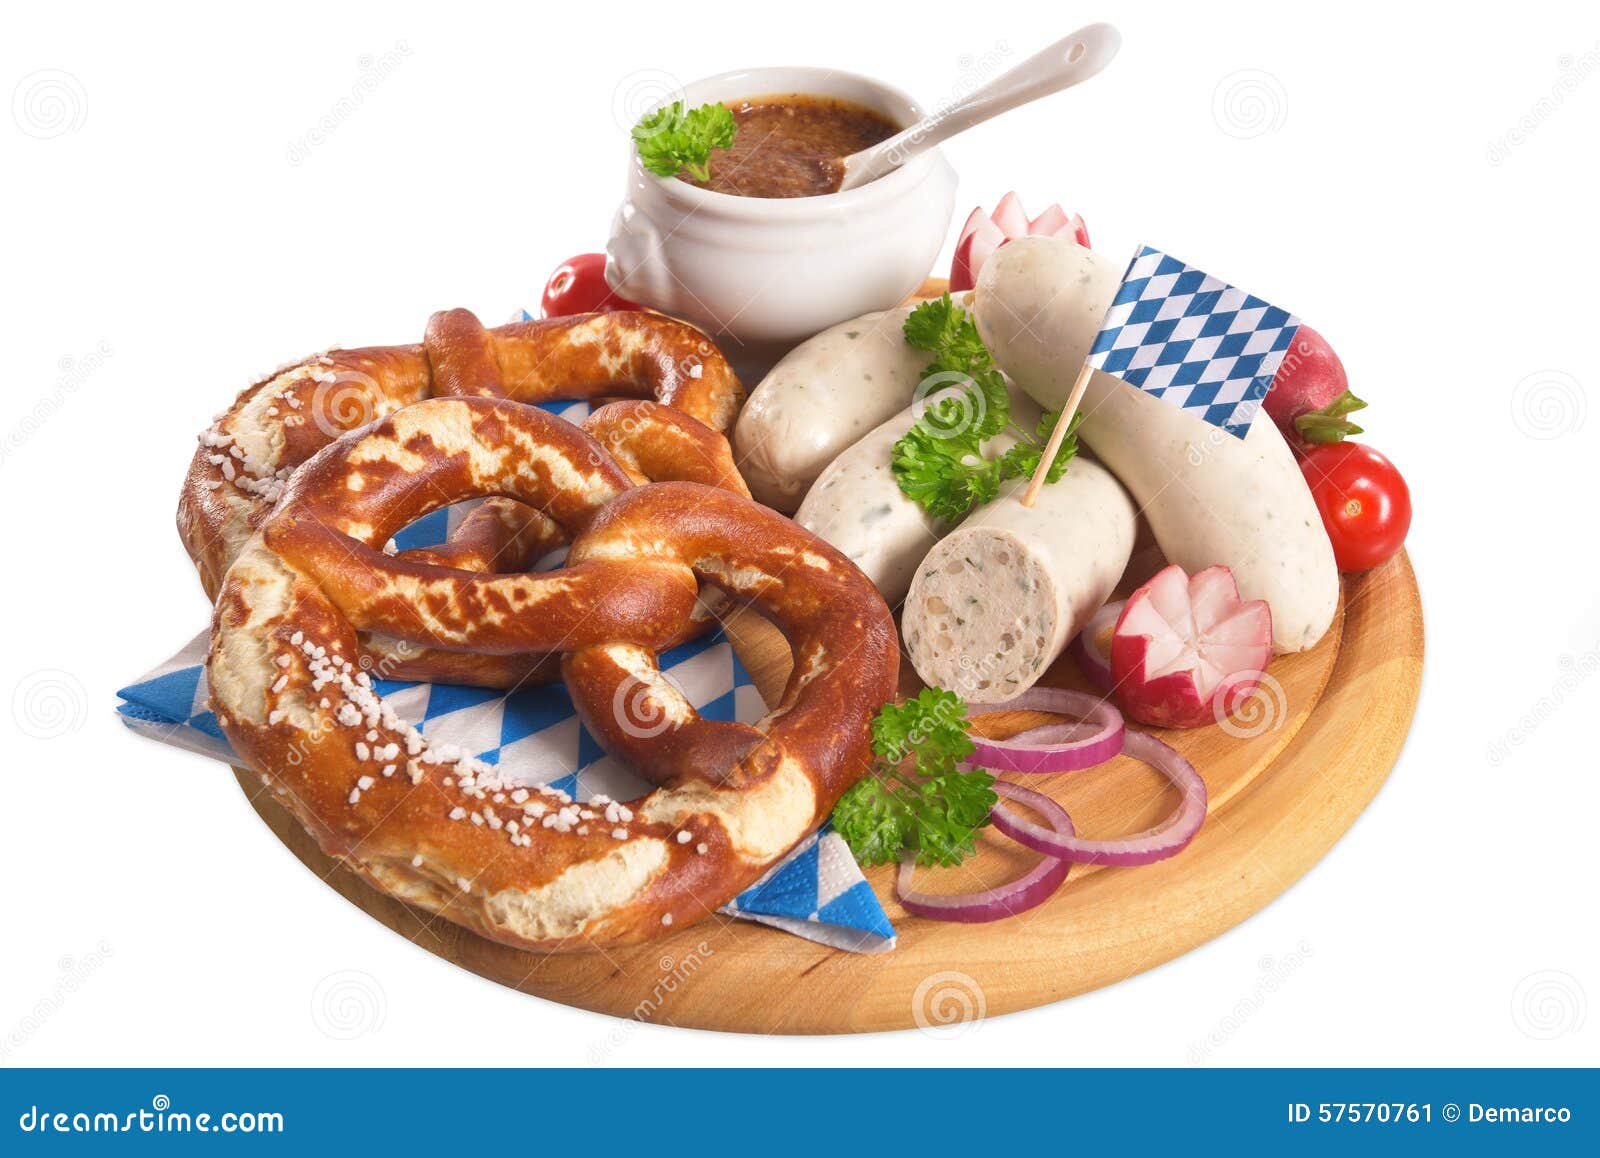 Bavarian Veal Sausage Breakfast Stock Image Image Of Fair Cutting